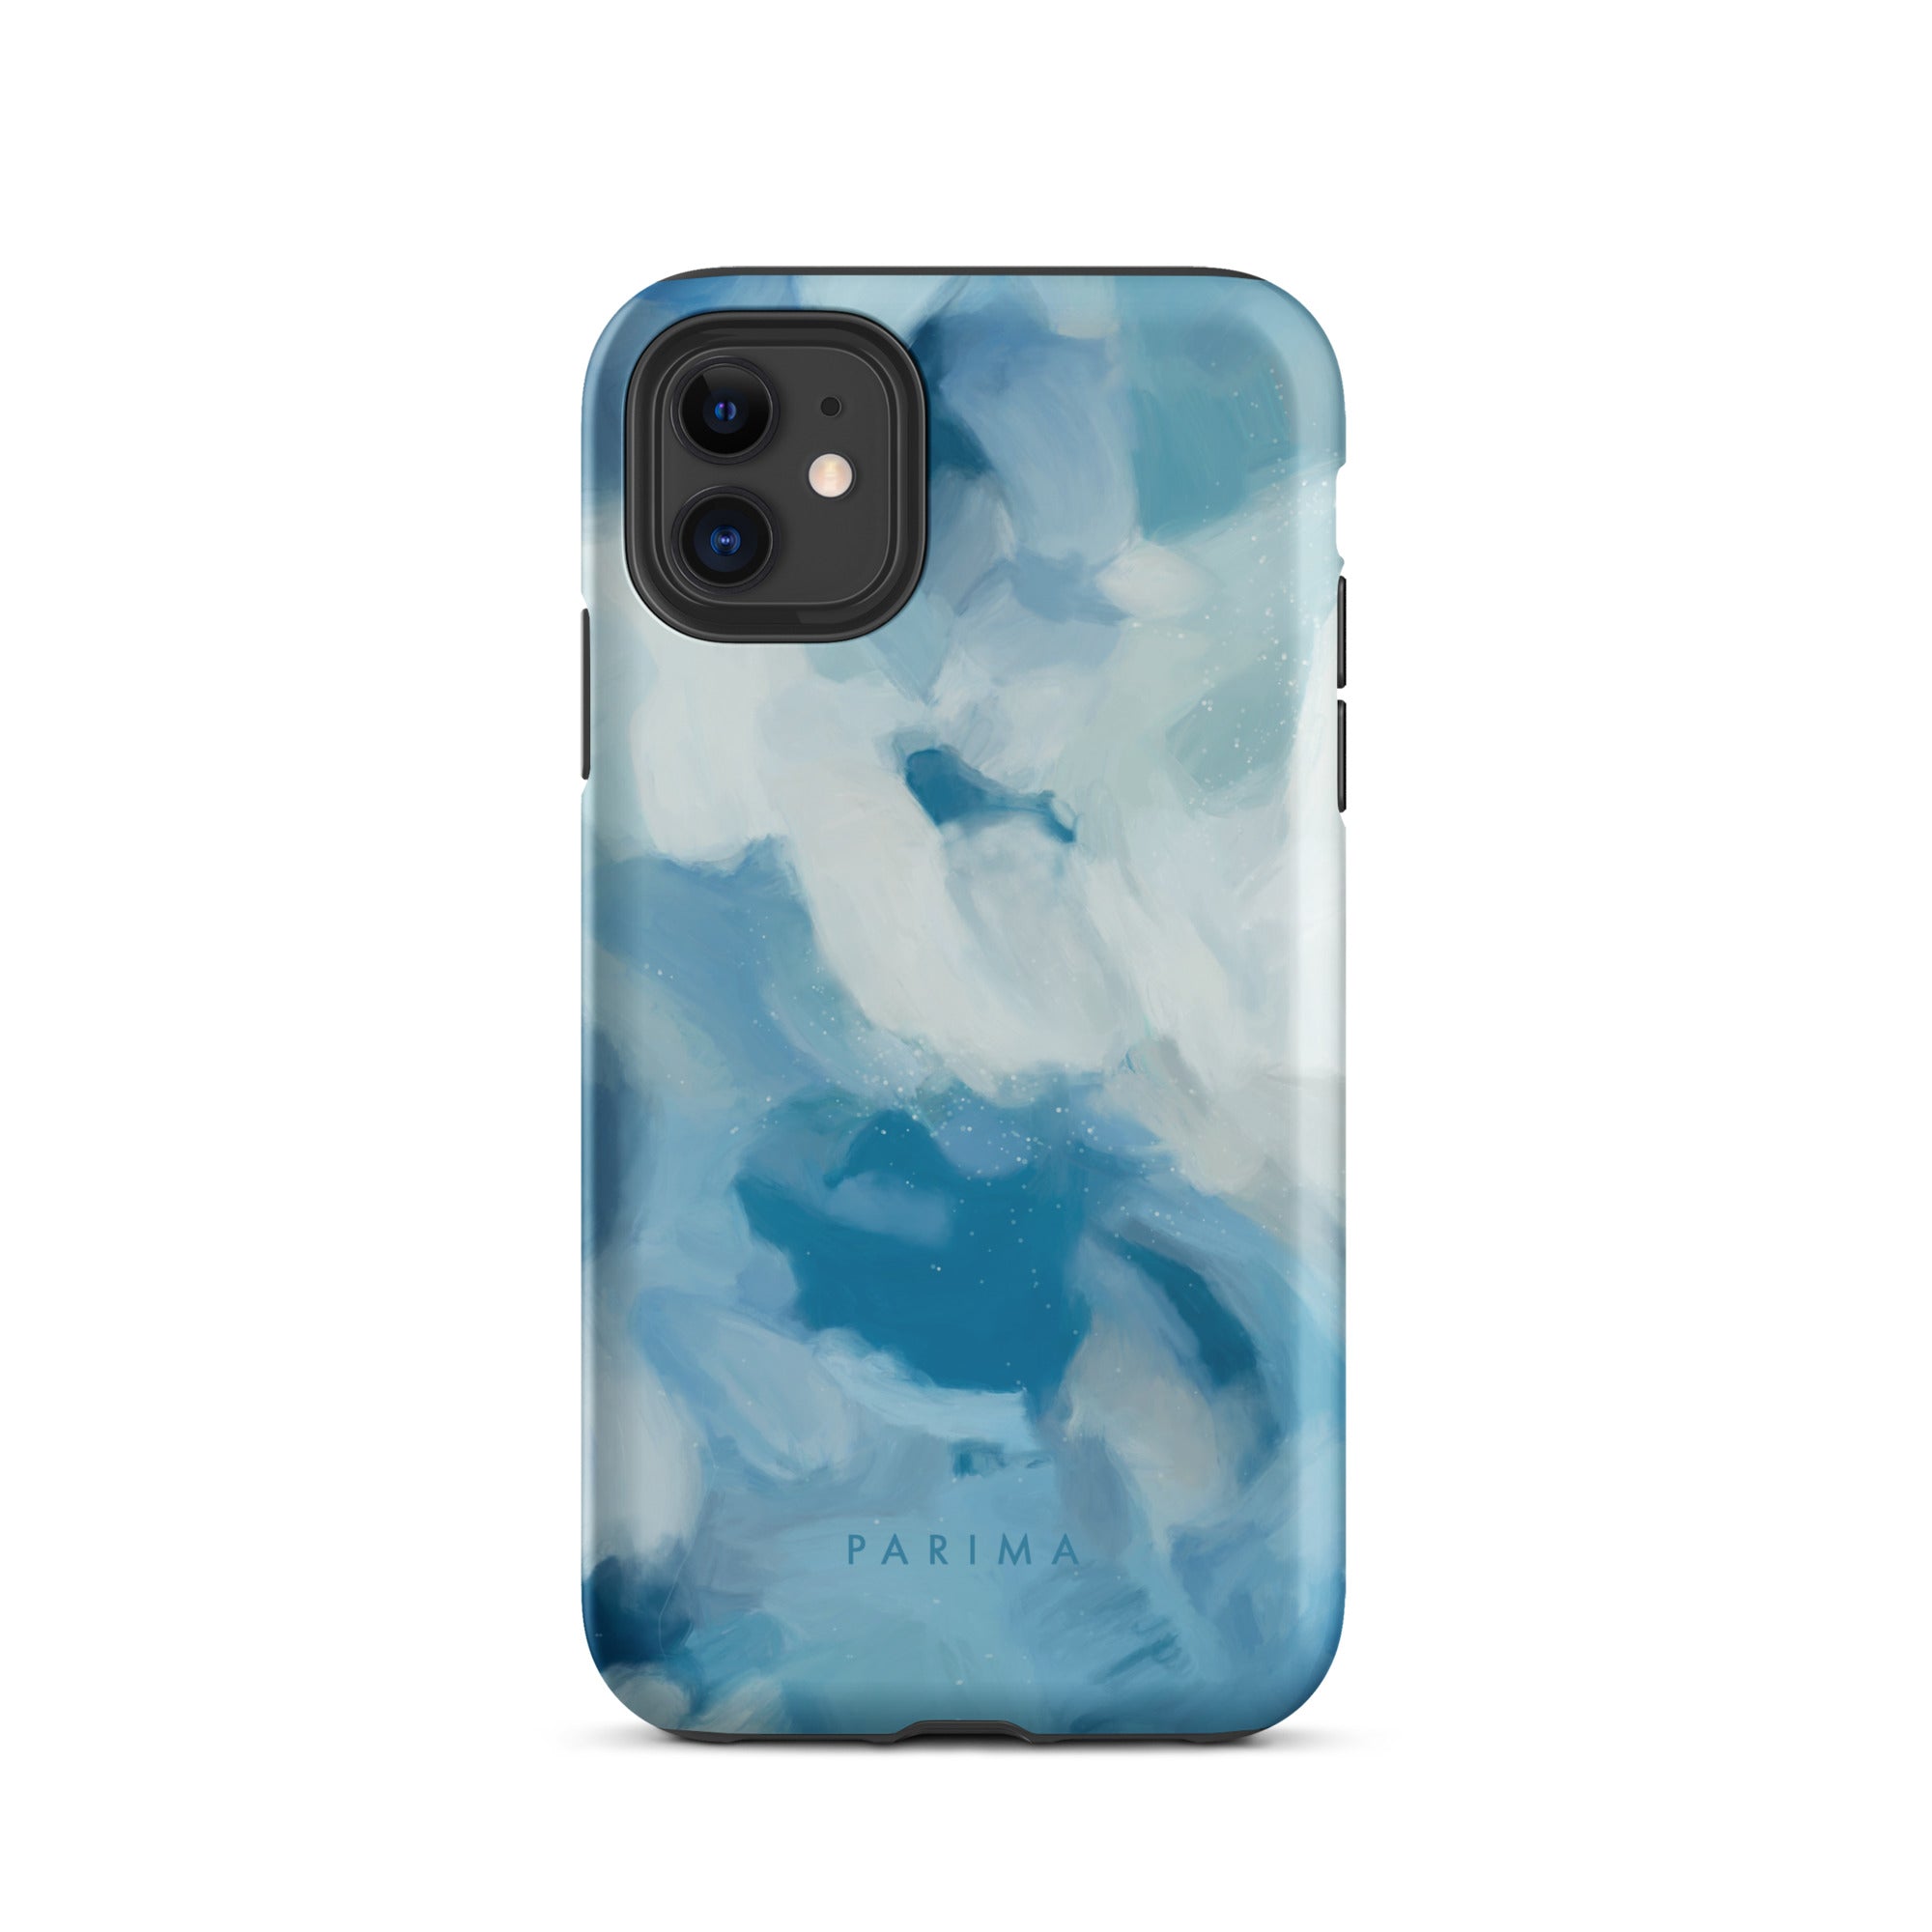 Liviana, blue abstract art - iPhone 11 tough case by Parima Studio